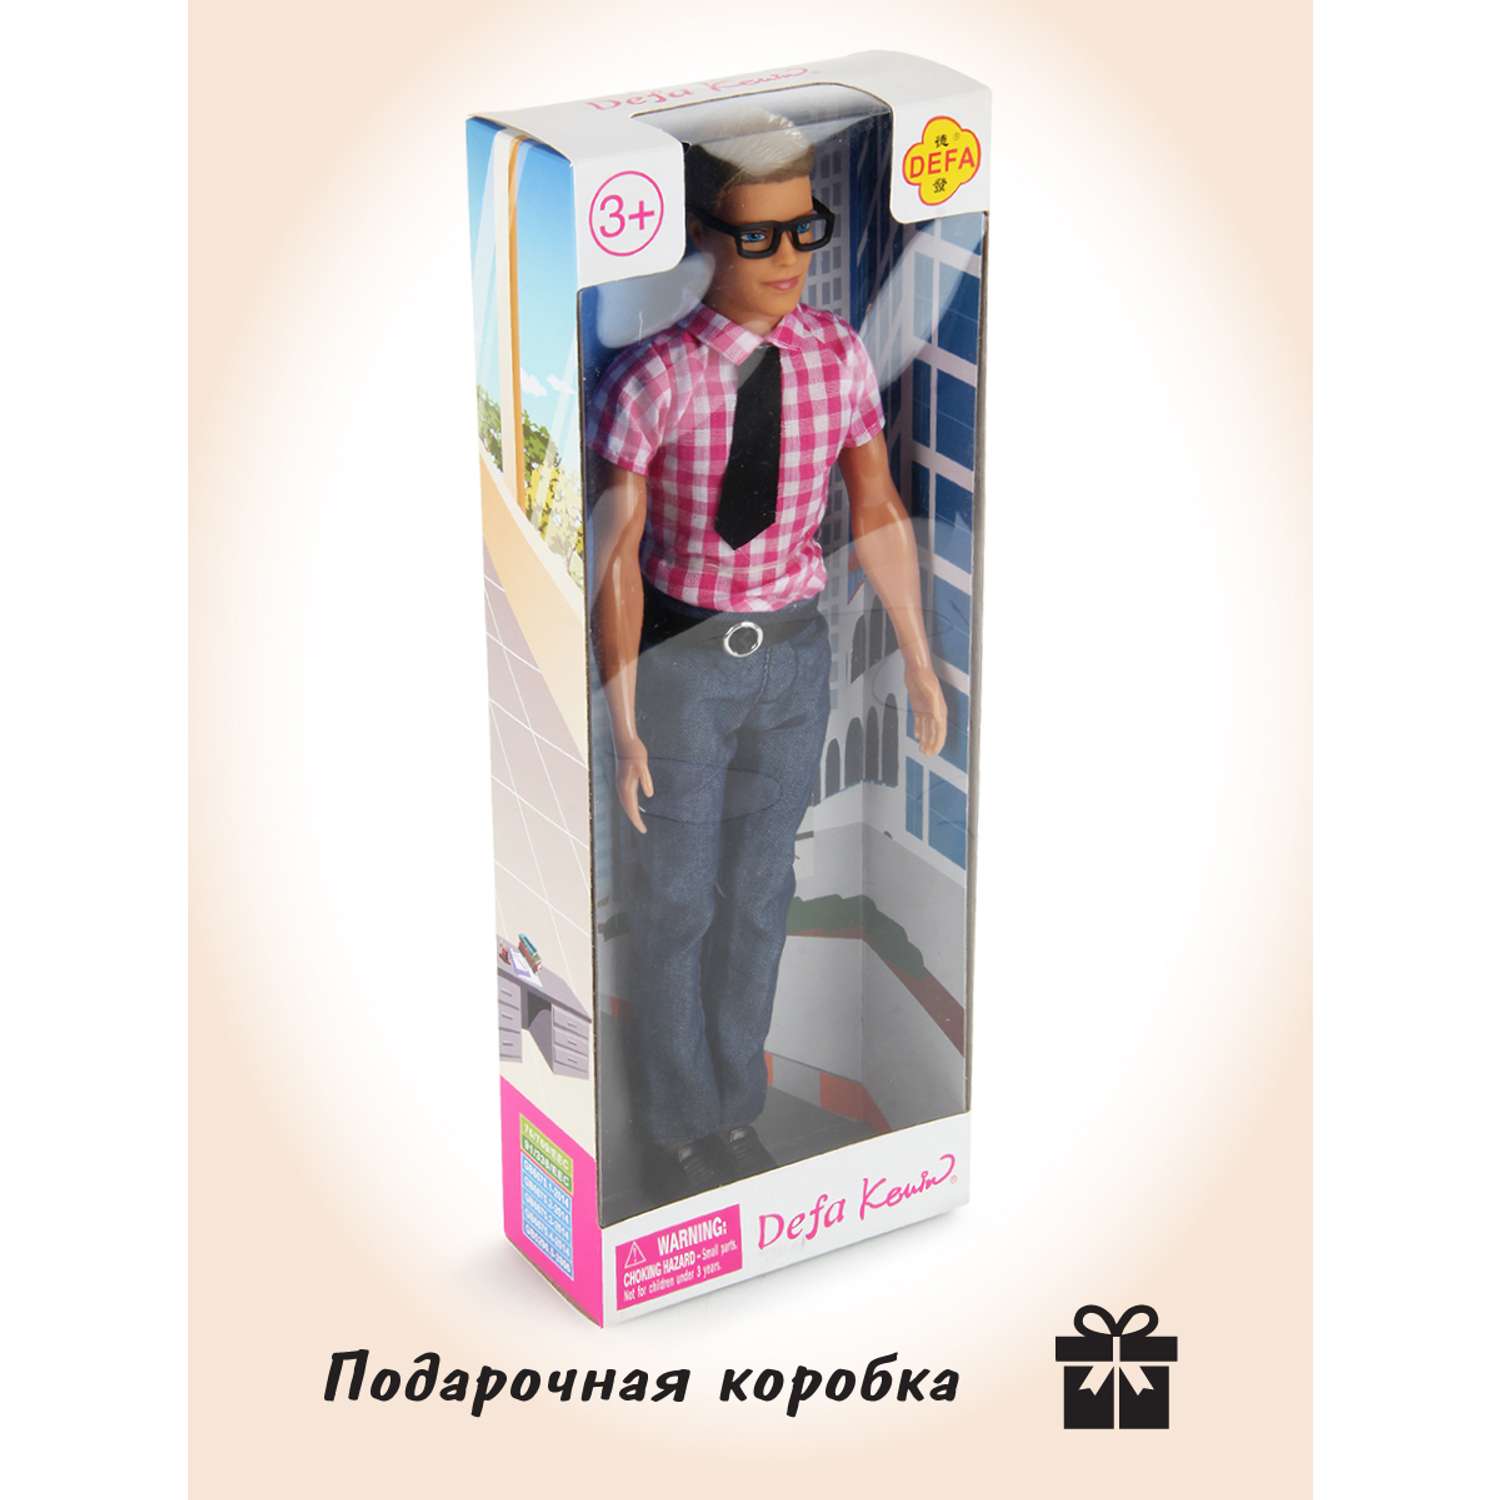 Кукла модель Кен Veld Co в очках 78425 - фото 6